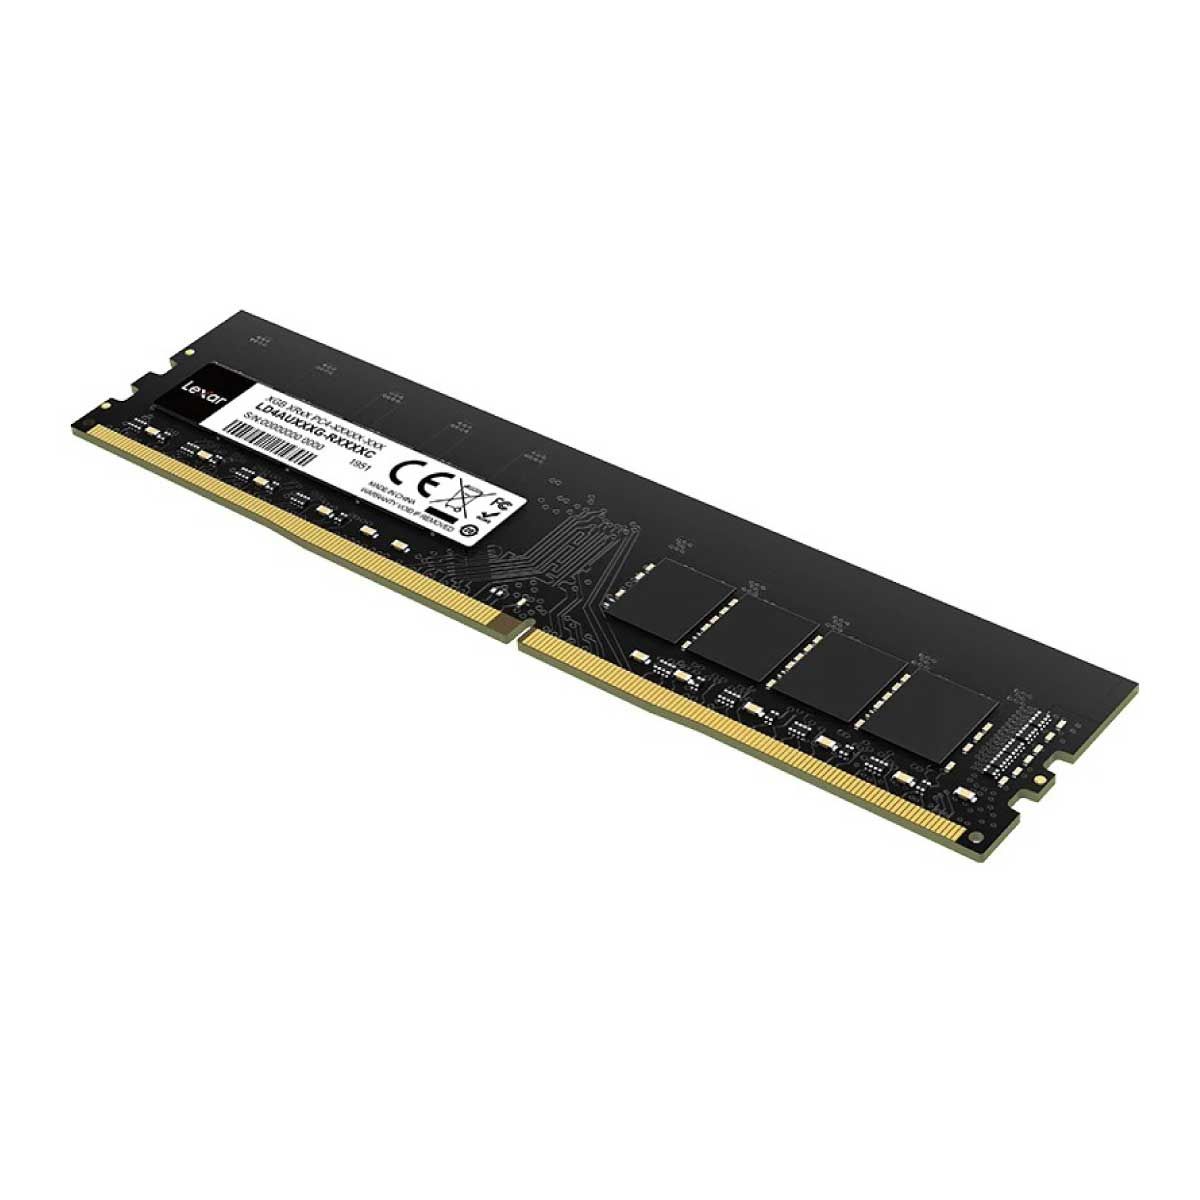 LEXAR DDR4-3200/2666 UDIMM DESKTOP MEMORY 4GB